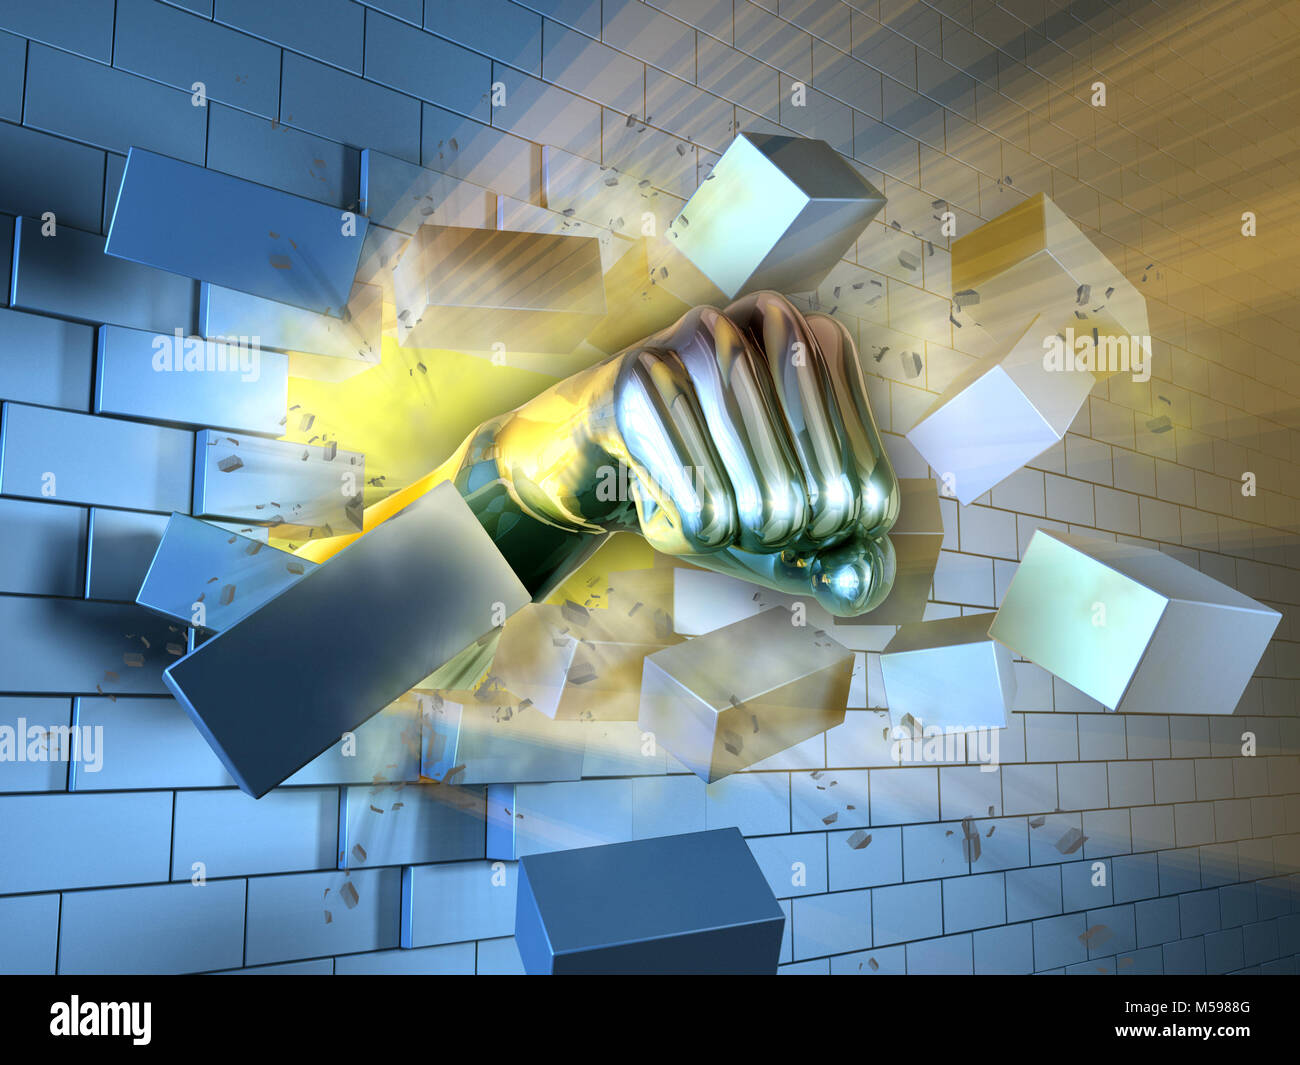 A metallic fist breaking through a brick wall. Digital illustration. Stock Photo